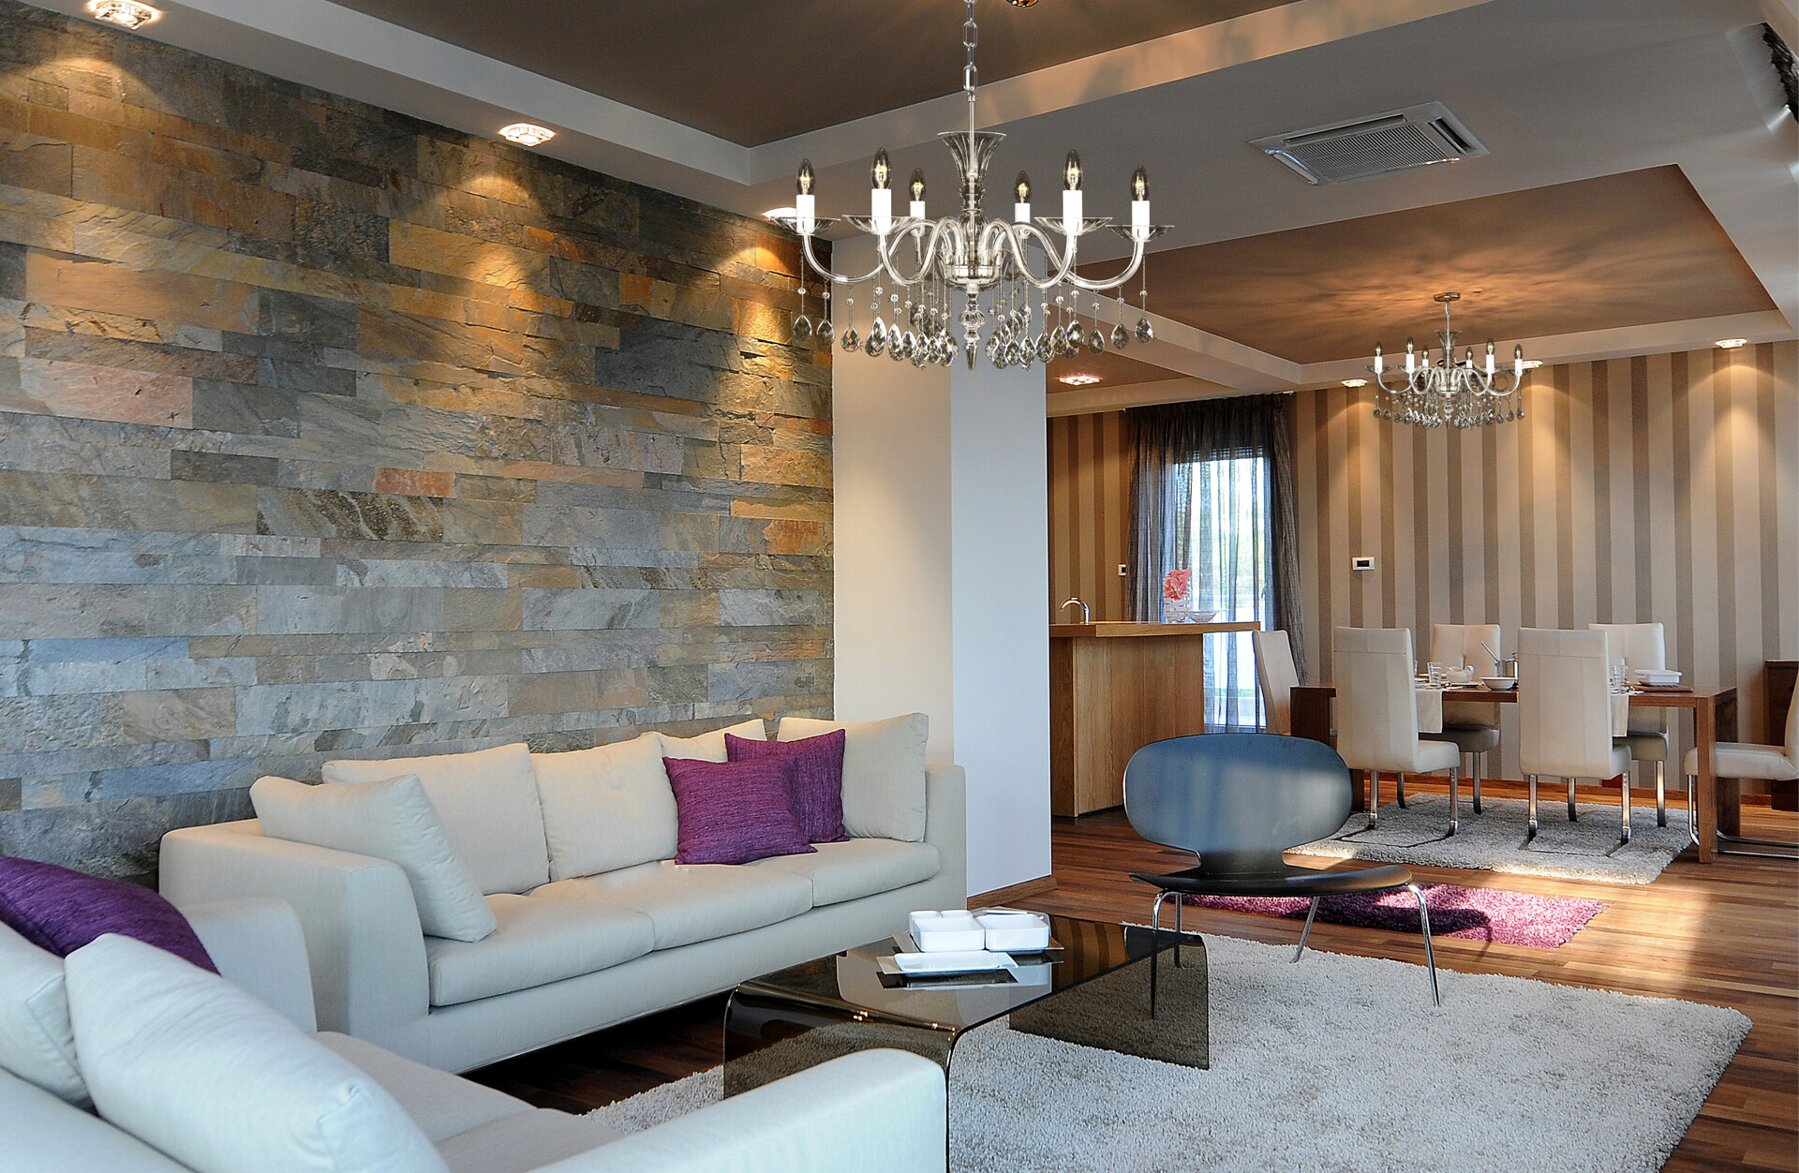 Crystal chandelier for modern living room in scandinavian style LB40500658P505